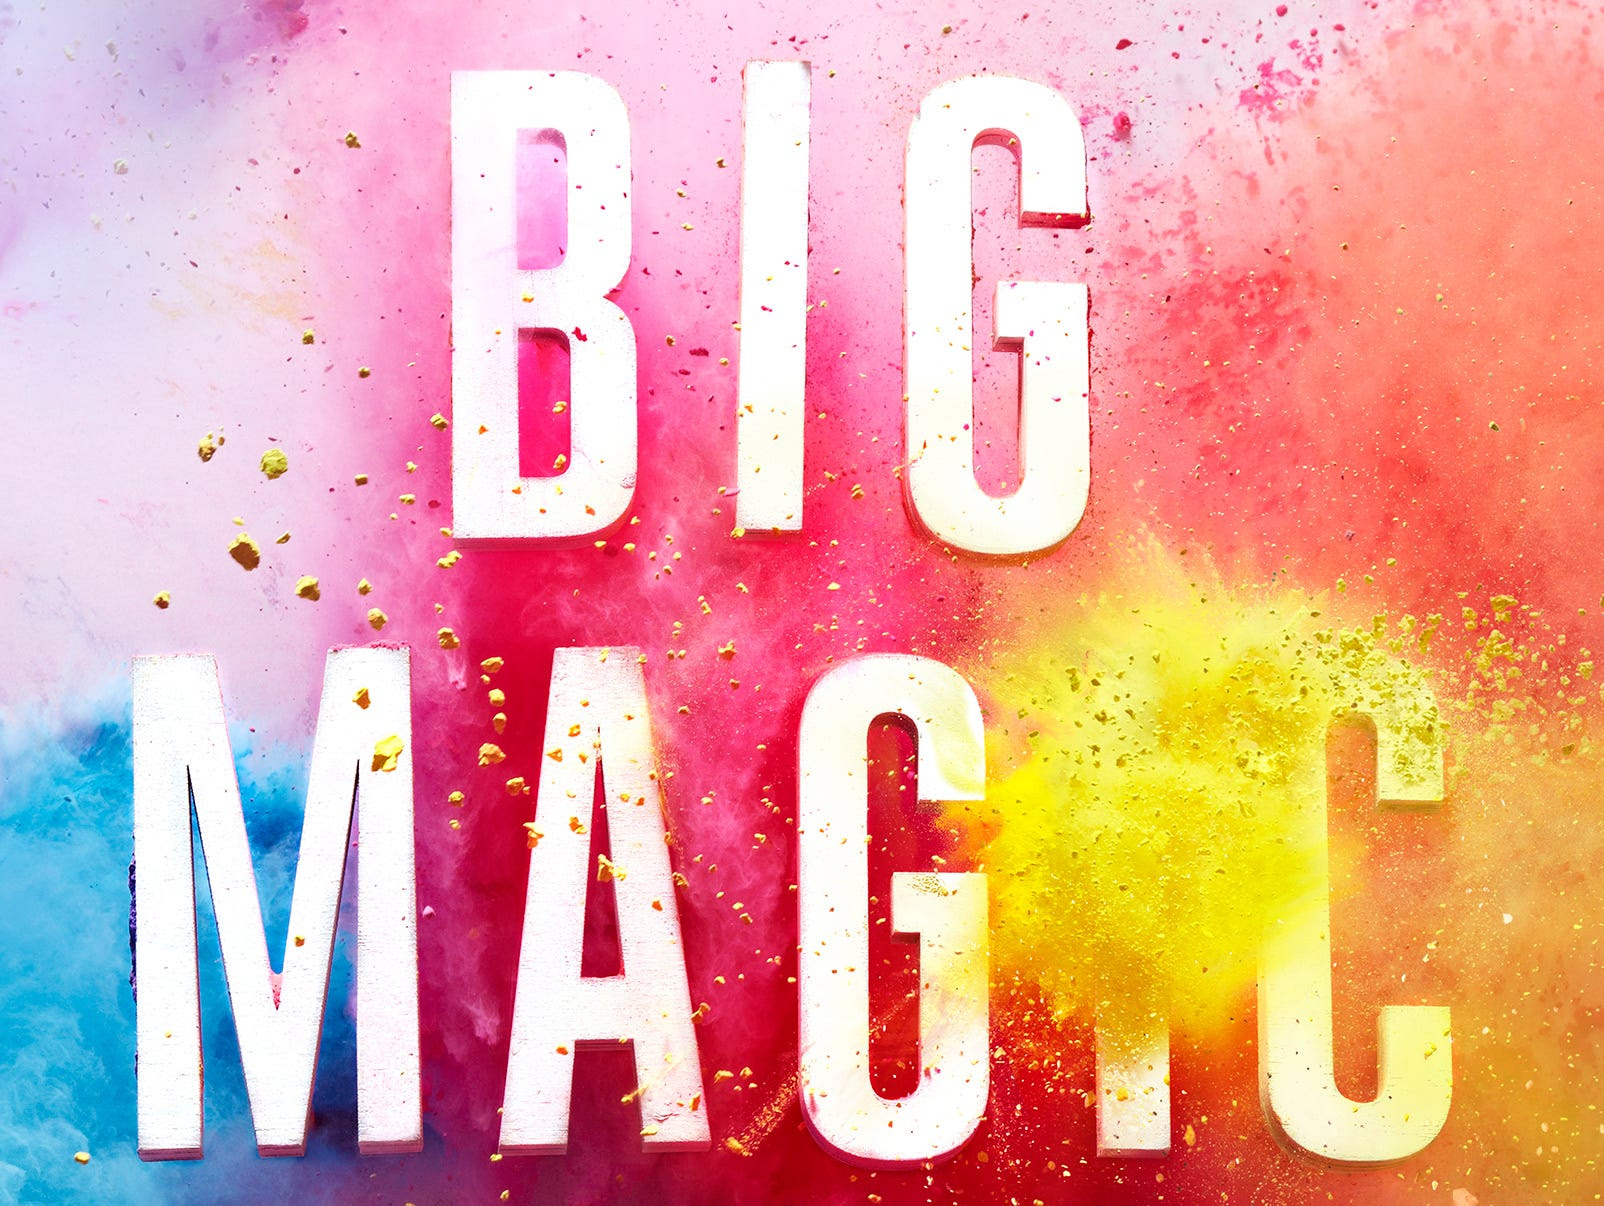 'Big Magic' by Elizabeth Gilbert will publish on Sept. 22.